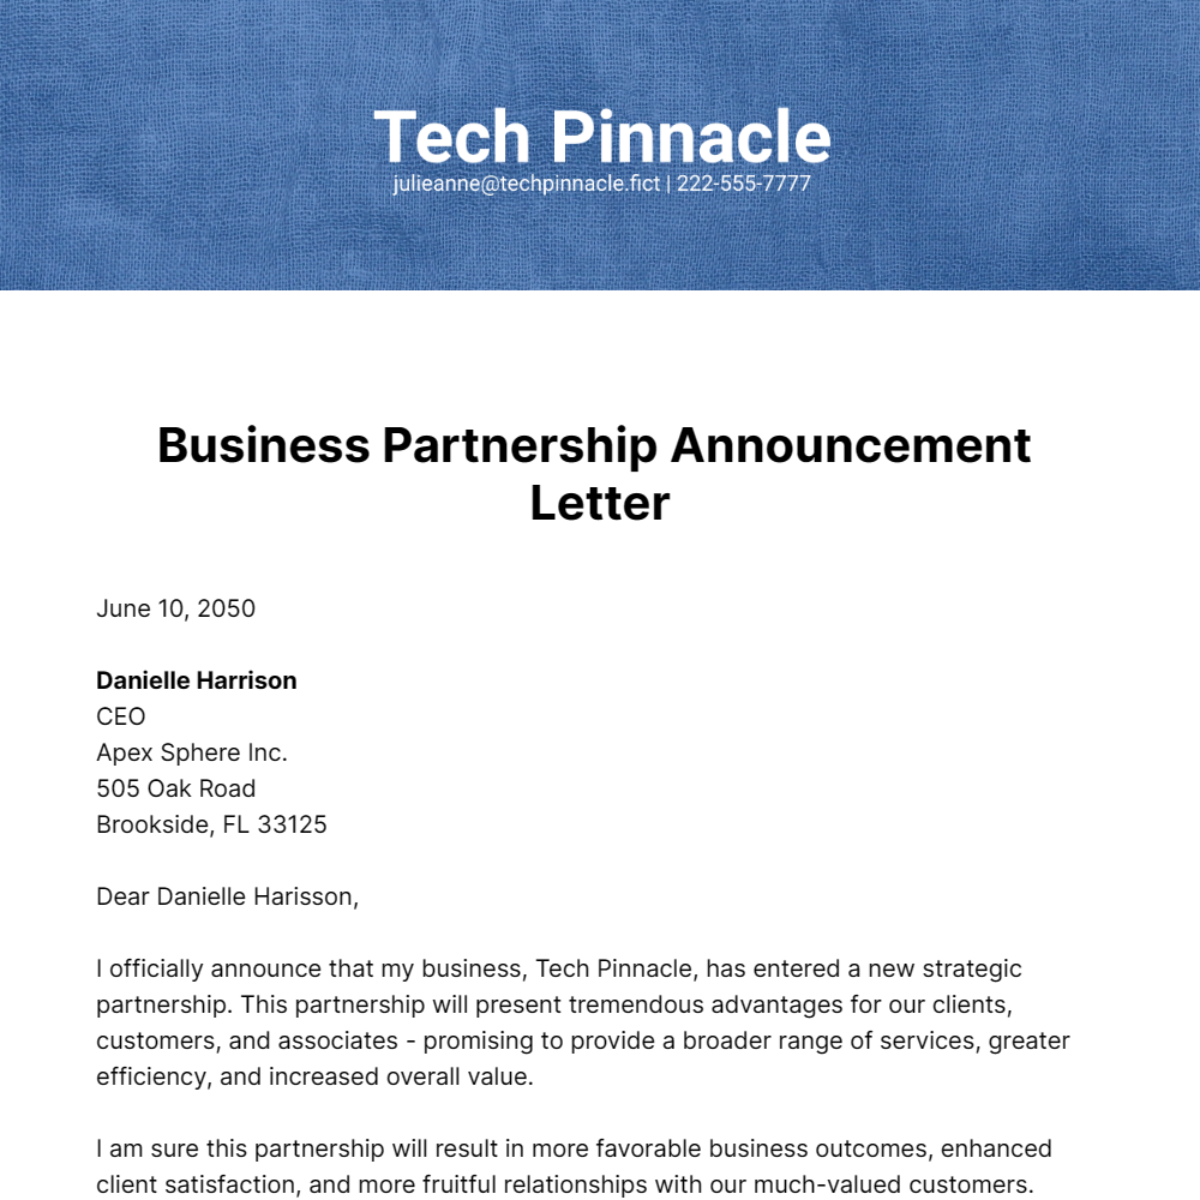 Business Partnership Announcement Letter Template